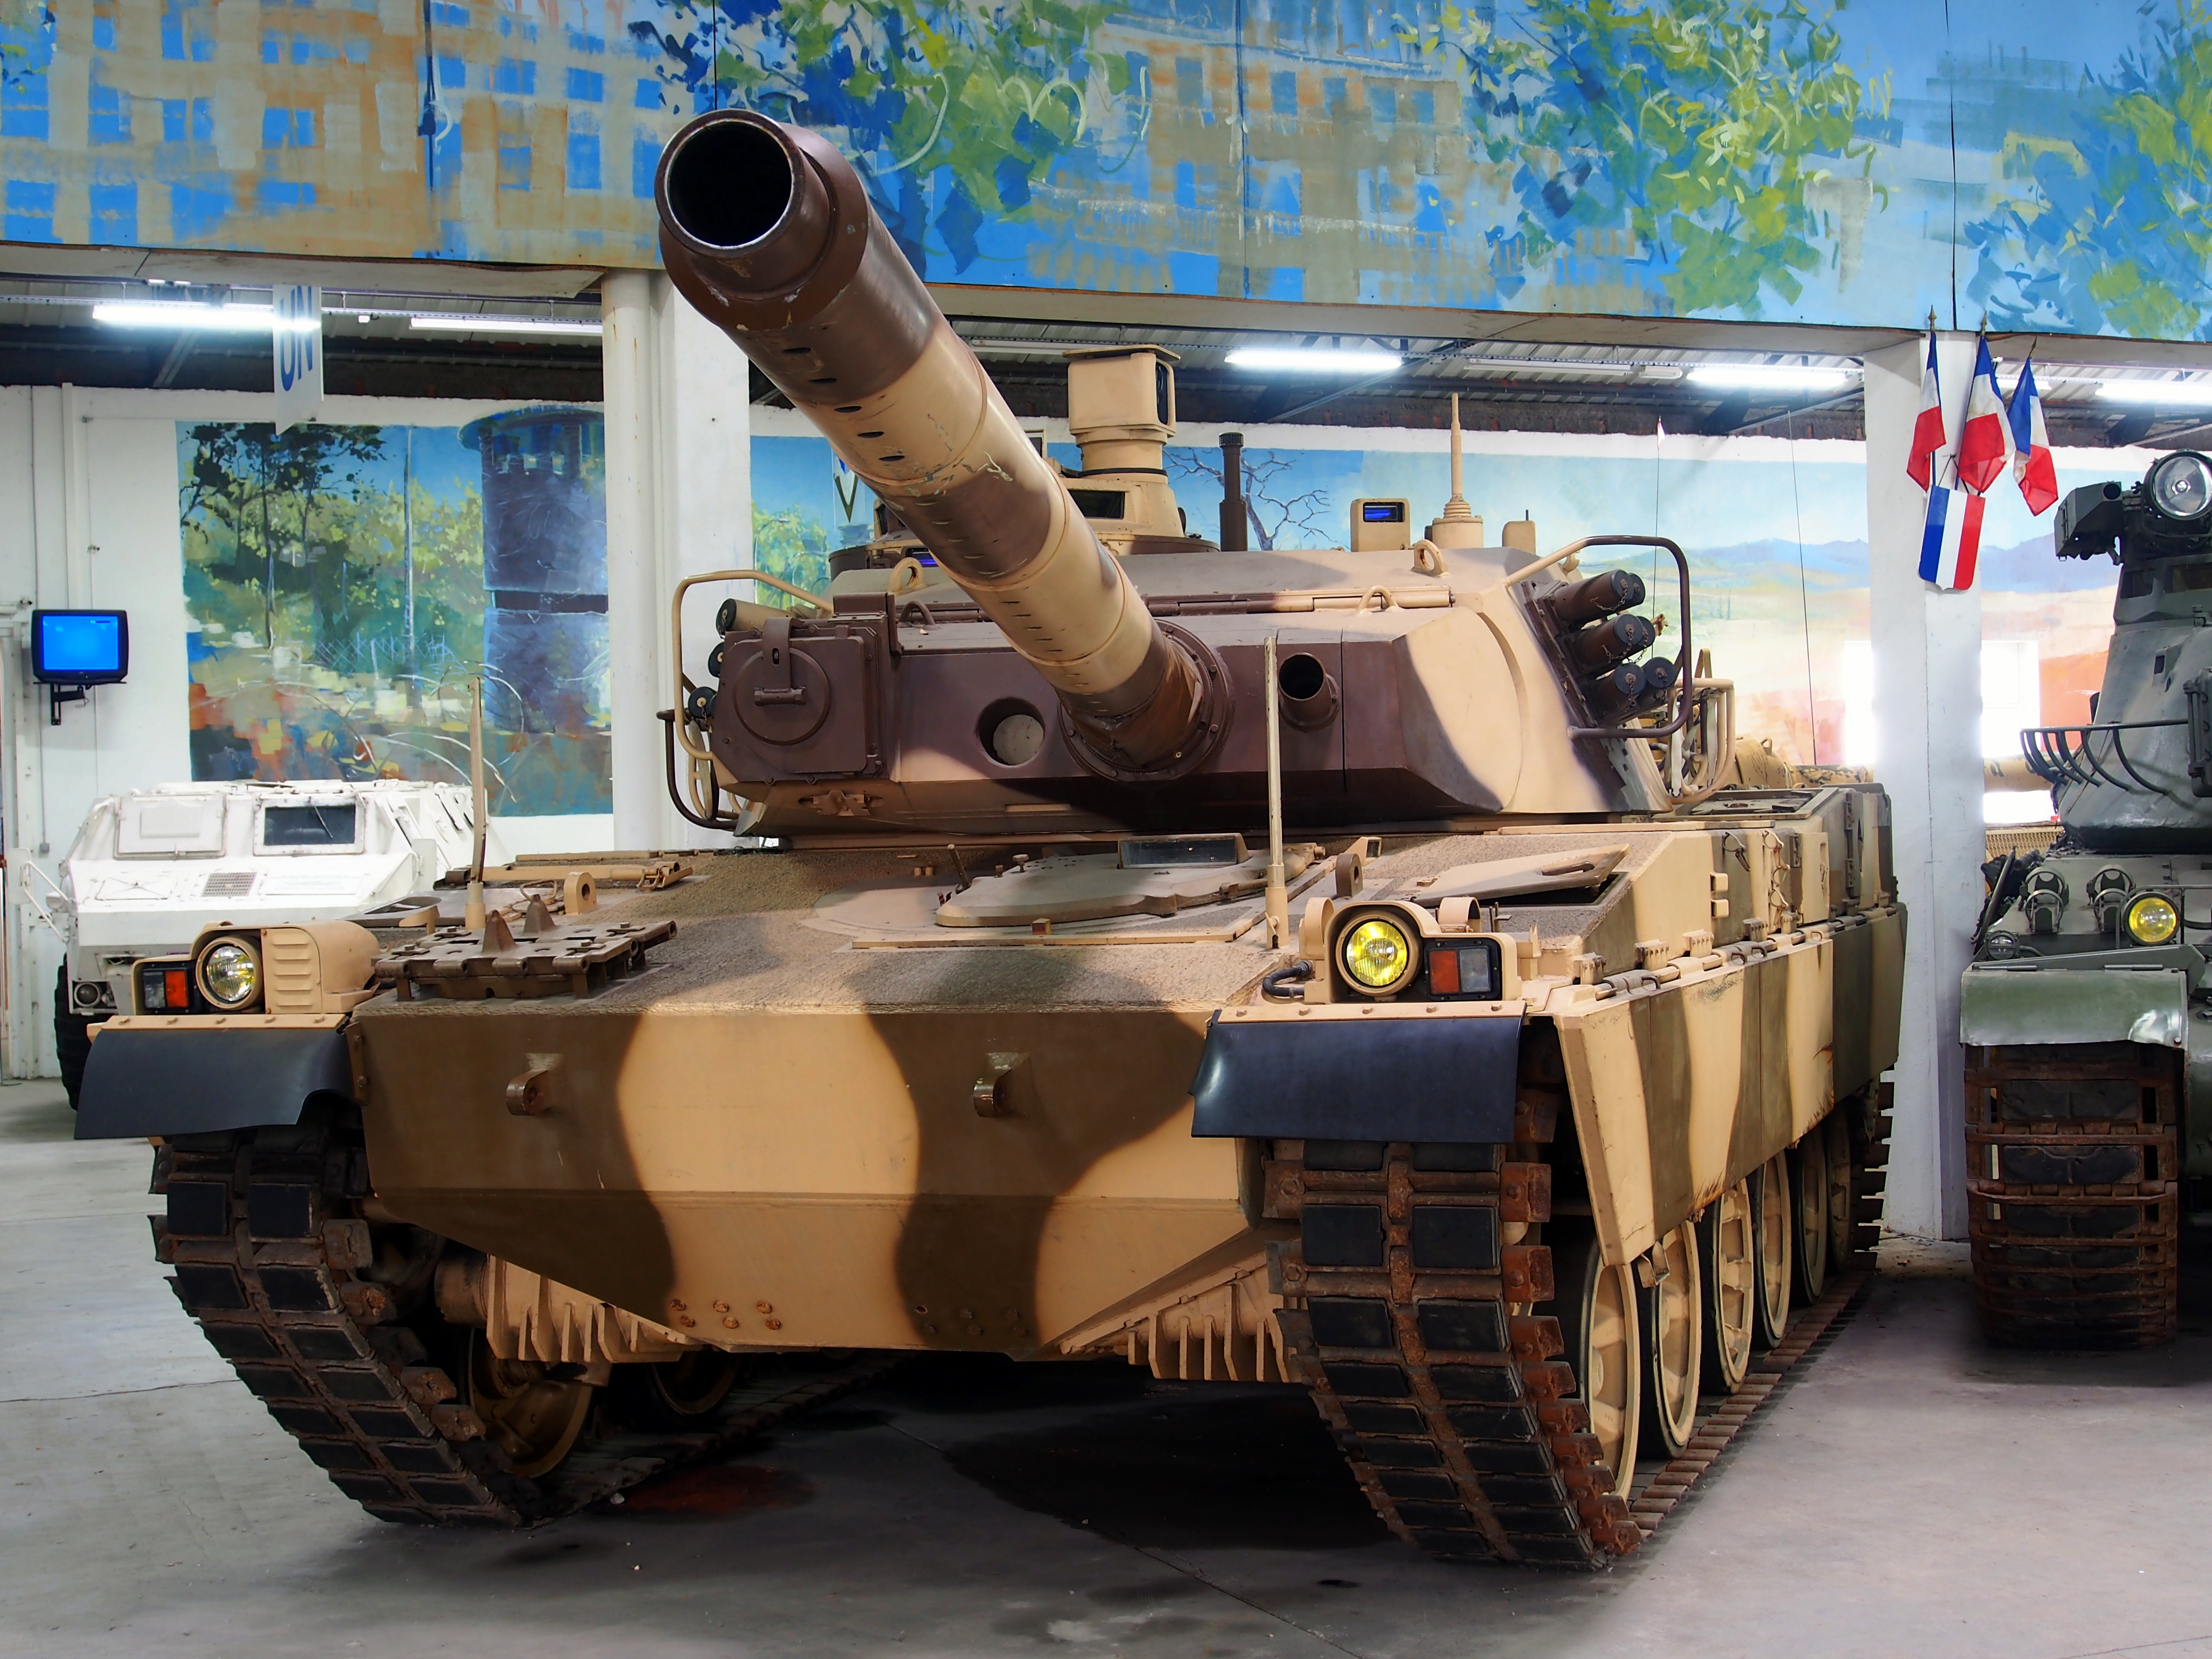 AMX-40%2C_Tanks_in_the_Mus%C3%A9e_des_Blind%C3%A9s%2C_France%2C_pic-2.JPG